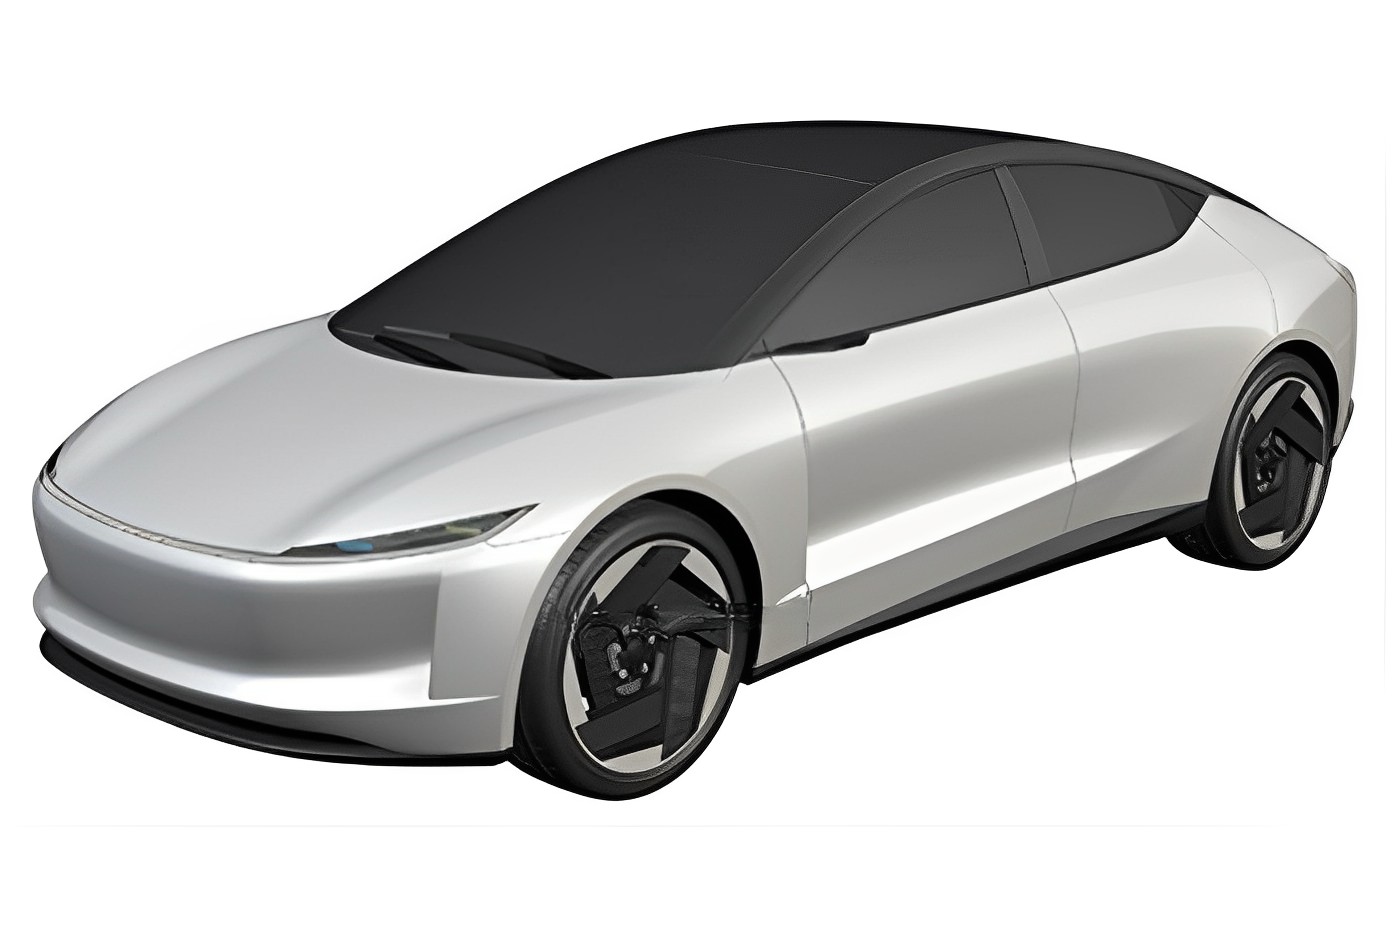 https://e-vehicleinfo.com/ola-electric-car-design-revealed-tesla-inspired-style